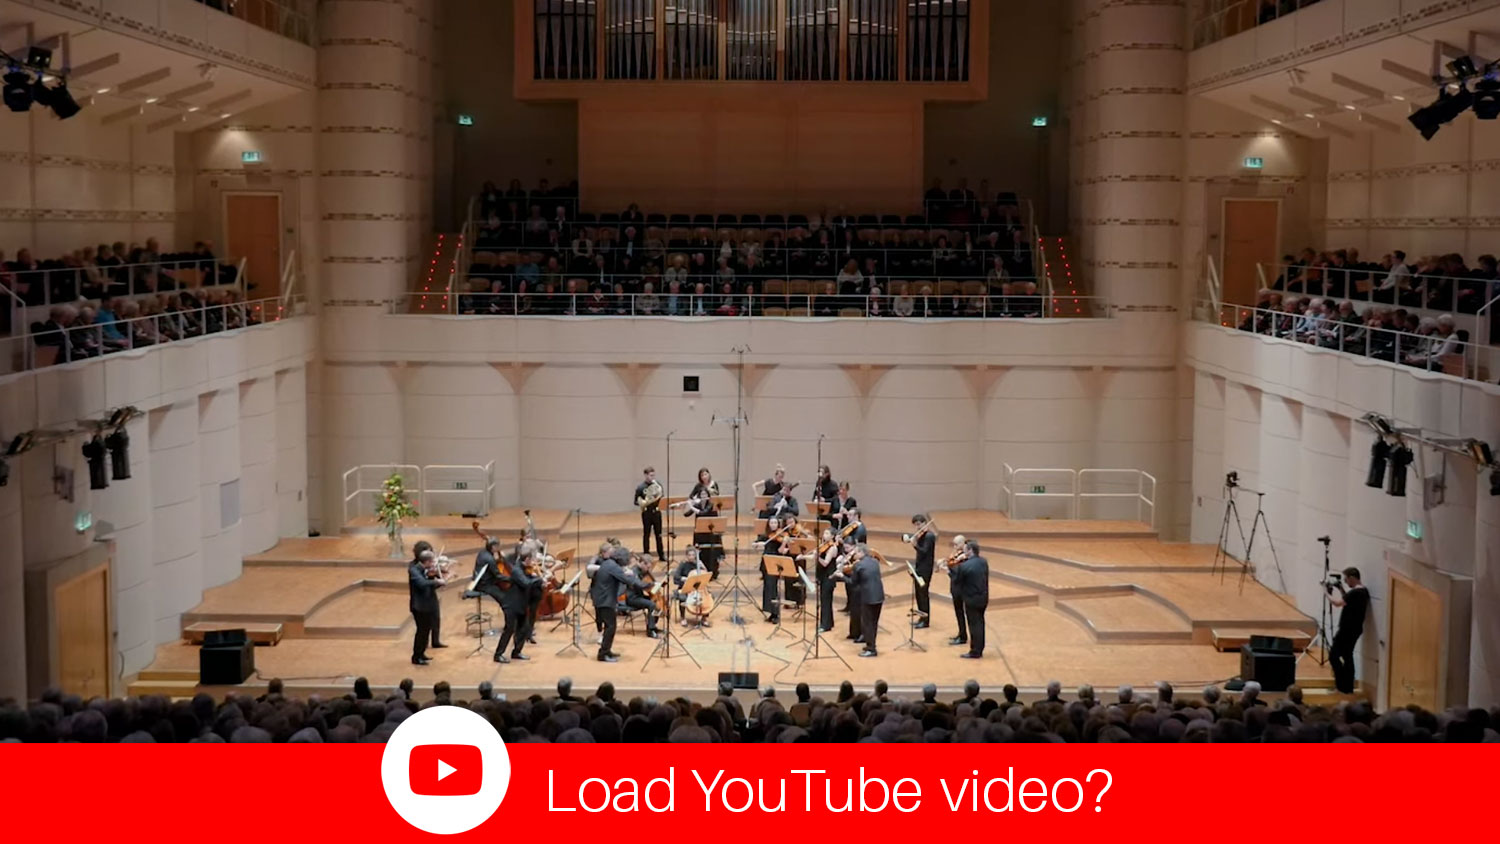 YouTube Video Franz Schubert's Symphony No. 5